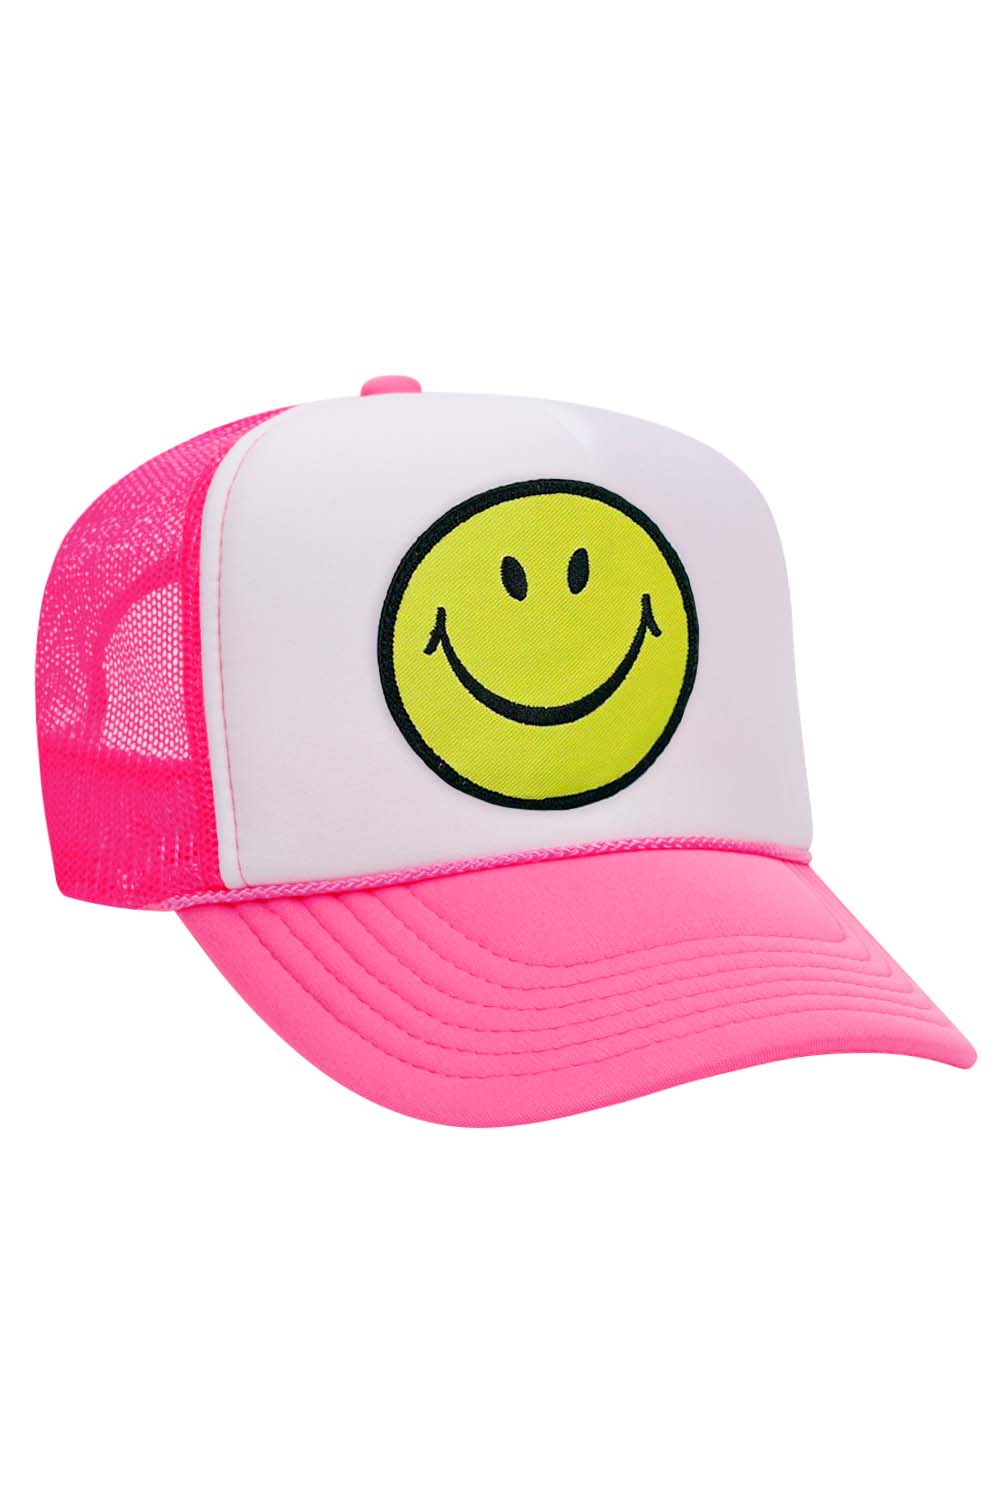 SMILEY VINTAGE TRUCKER HAT HATS Aviator Nation OS NEON PINK // WHITE // NEON PINK 